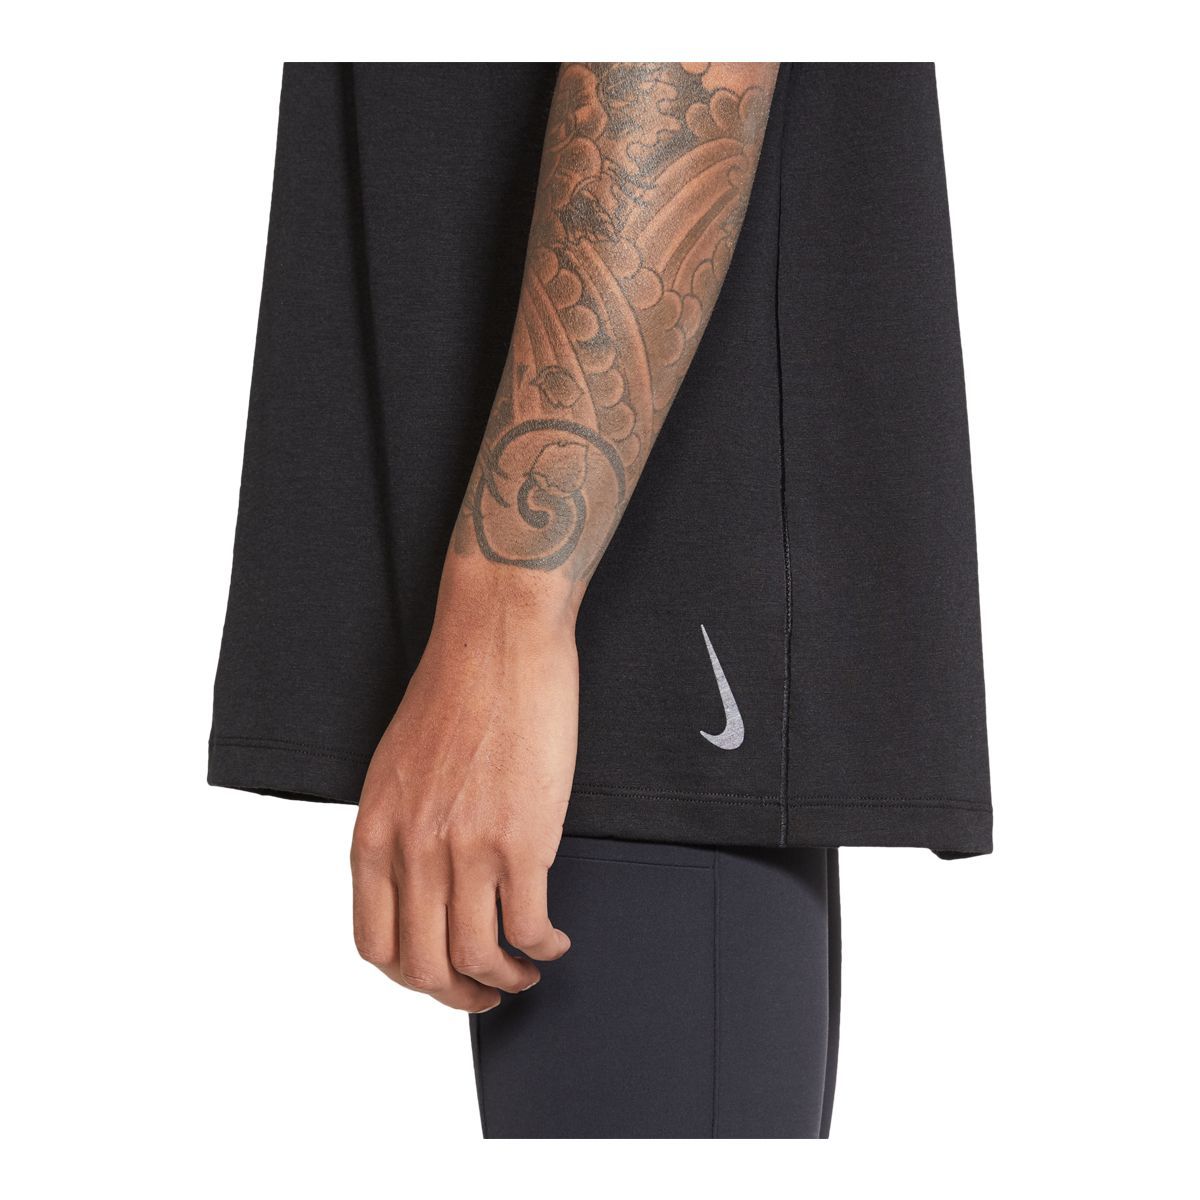 Nike Yoga Dri-FIT Core t-shirt in black